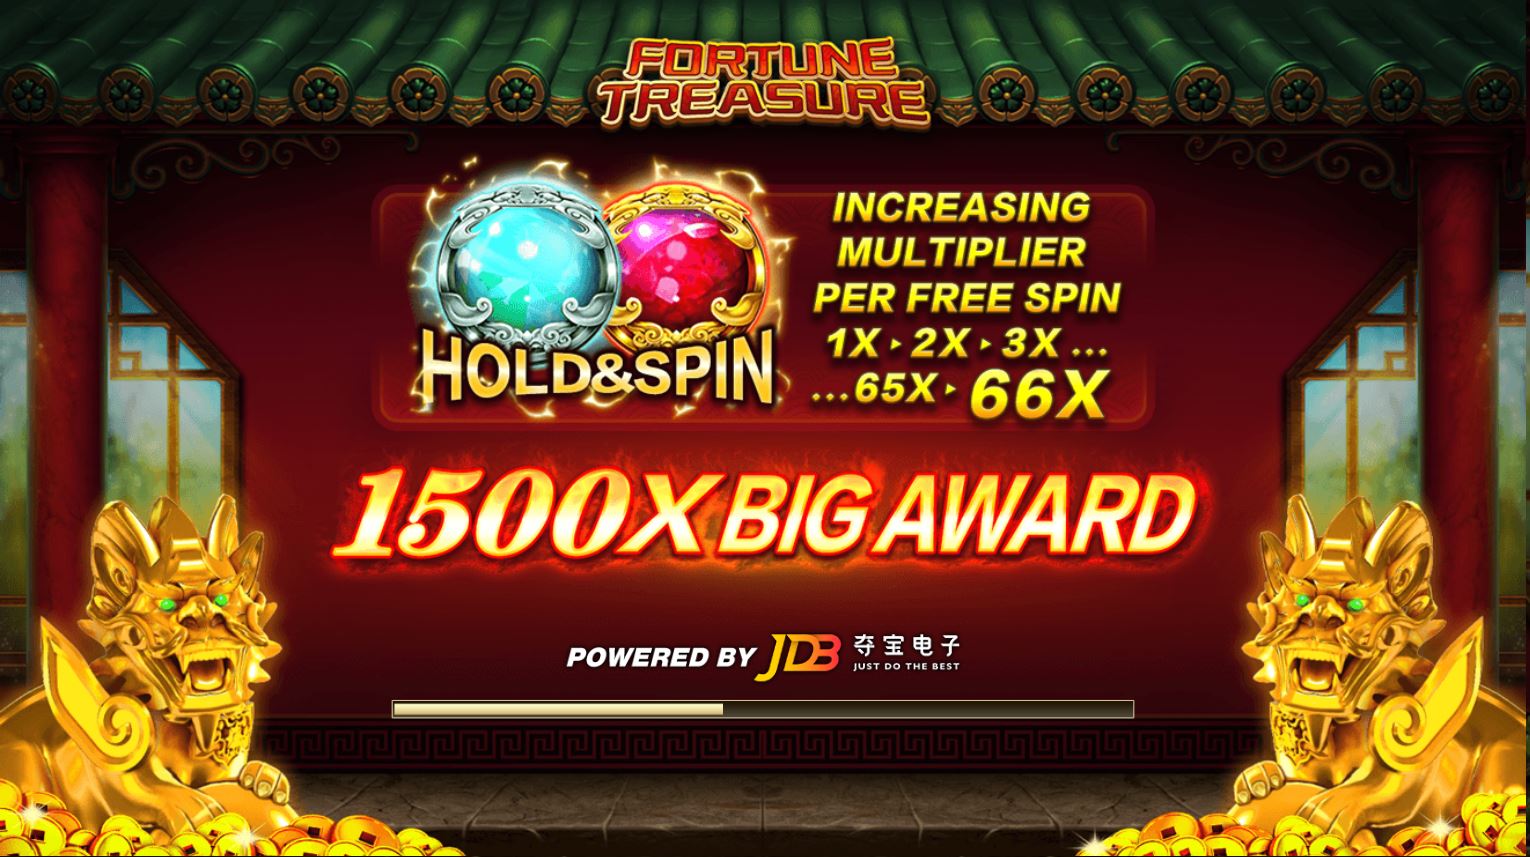 slot สล็อต JDB Fortune Treasure – โบนัสซ้อนทับหลายครั้งช่วยให้คุณชนะ! คุณไม่จำเป็นต้องฝากเงิน ลงทะเบียนรับทันที200 pay69